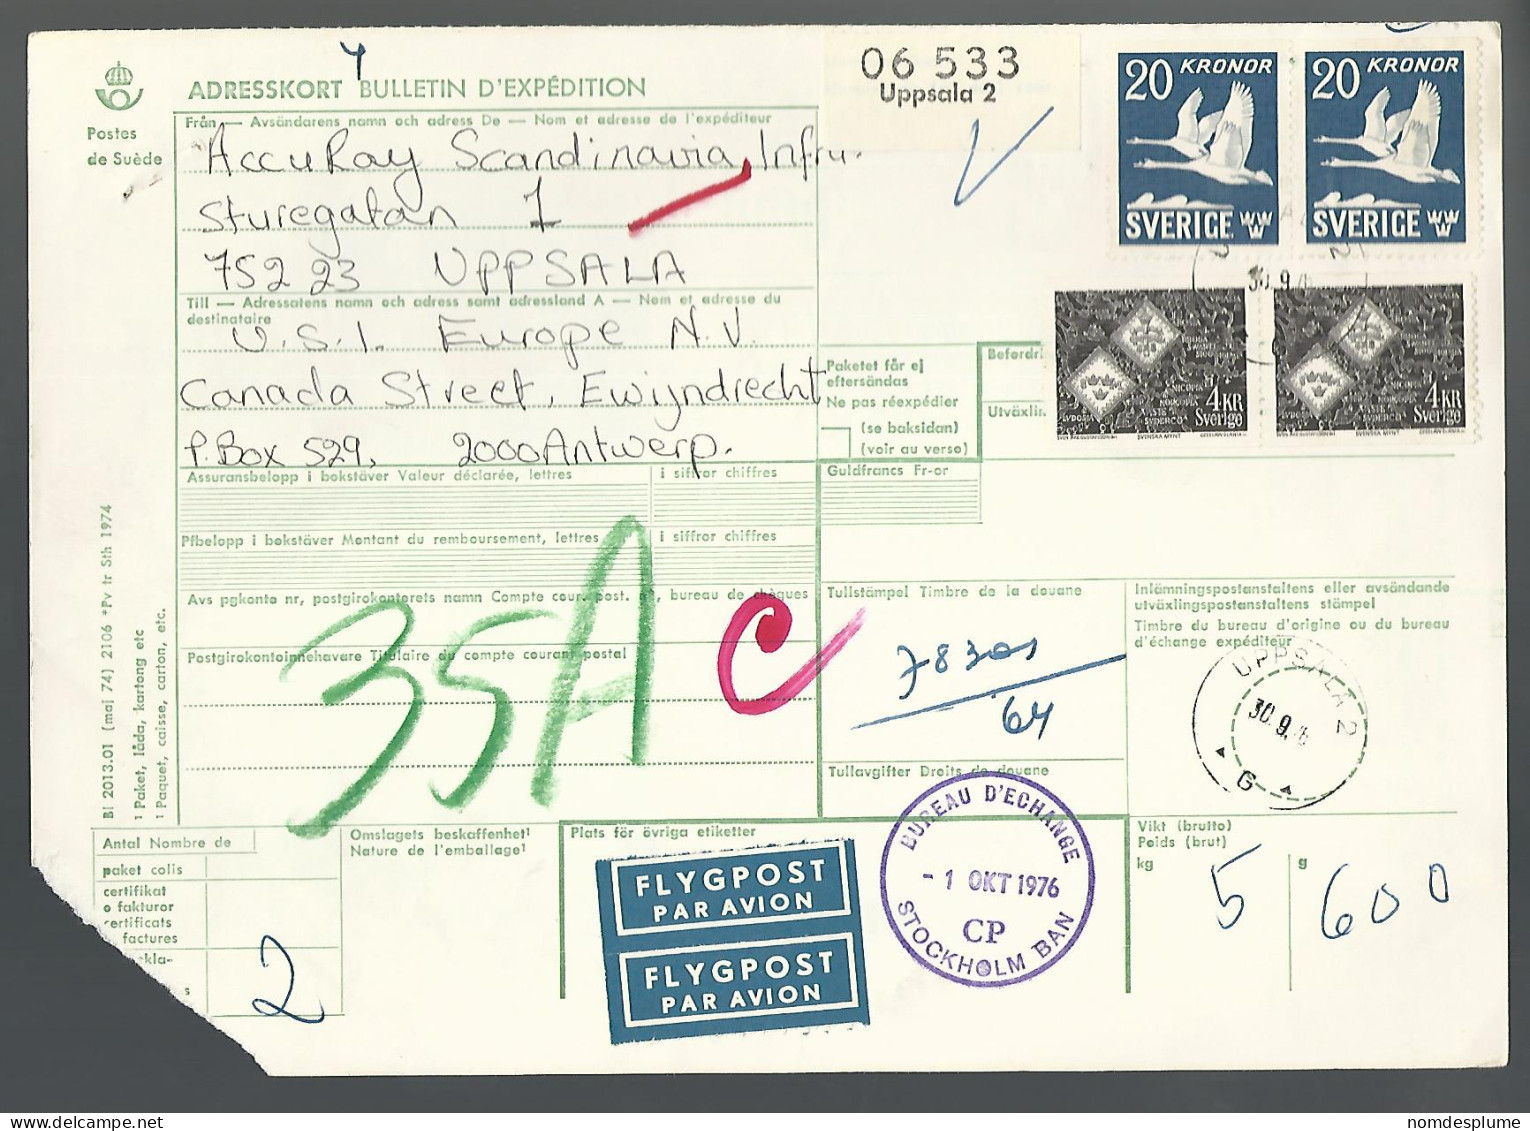 58526) Sweden Adresskort Bulletin D'Expedition 1976 Postmark Cancel Air Mail - Storia Postale